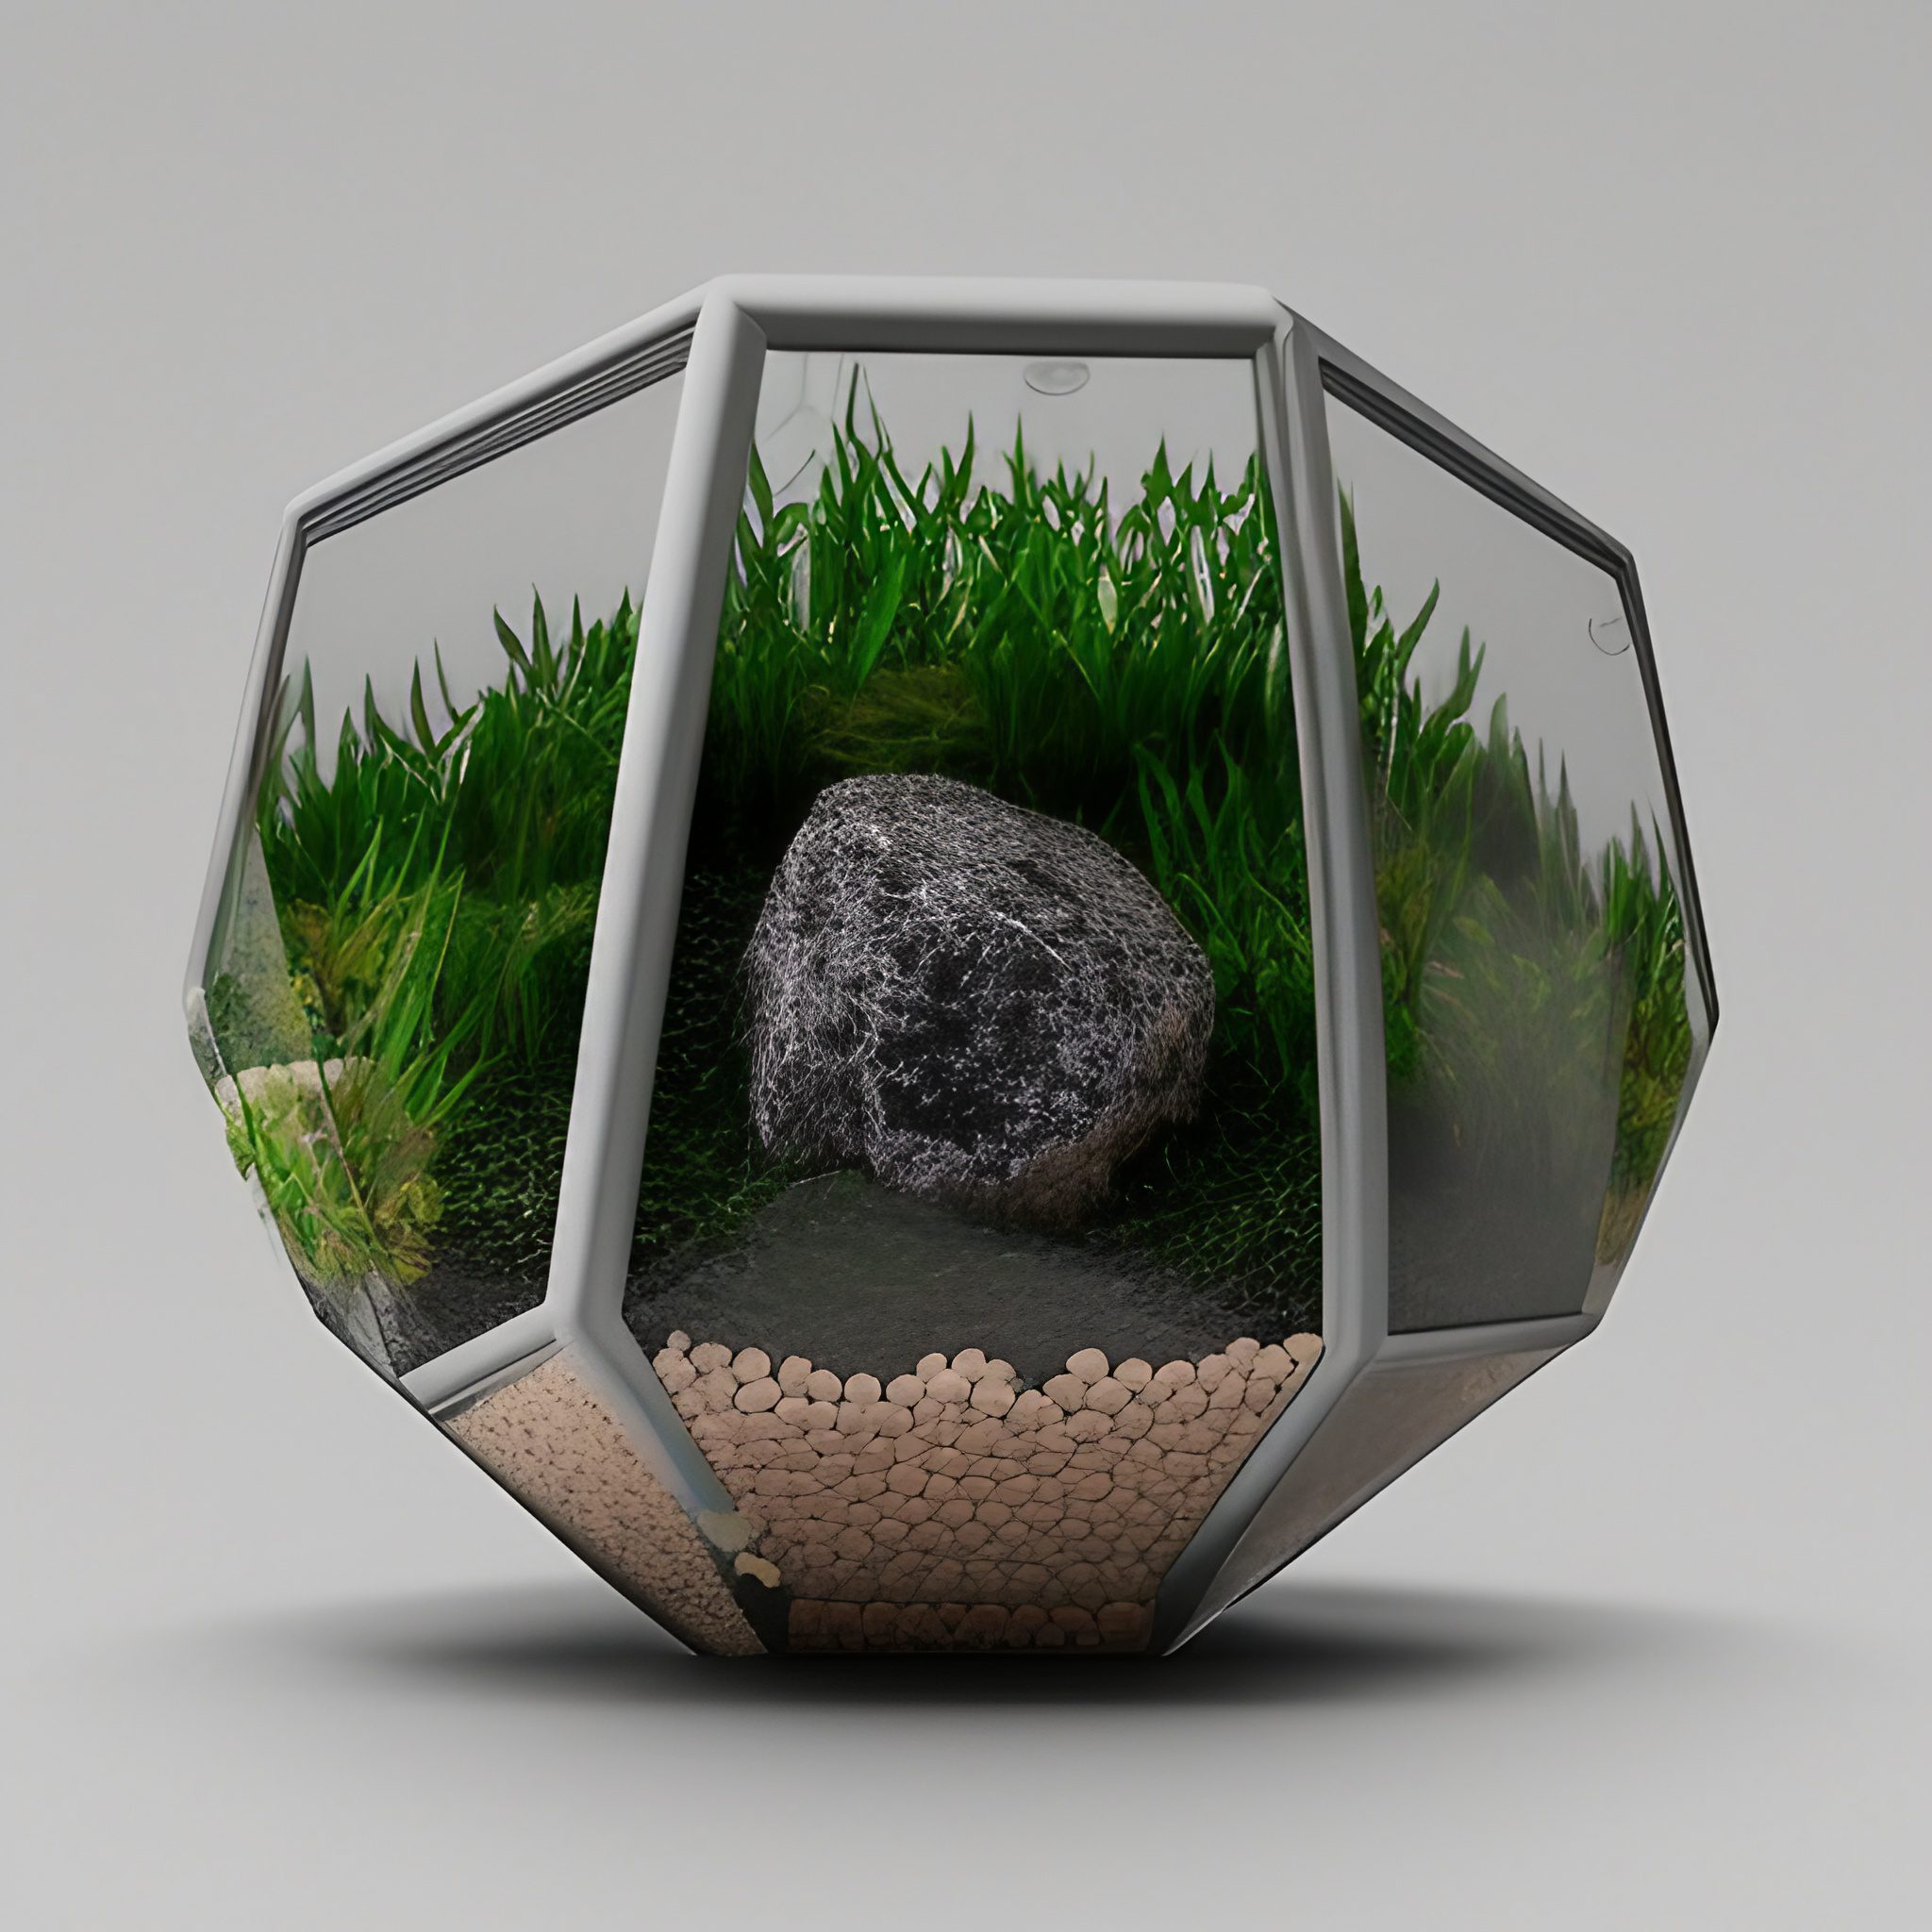 geluk Vermelden uitbarsting Impressive Geometric Terrariums You Can Buy Online - Terrarium Creations